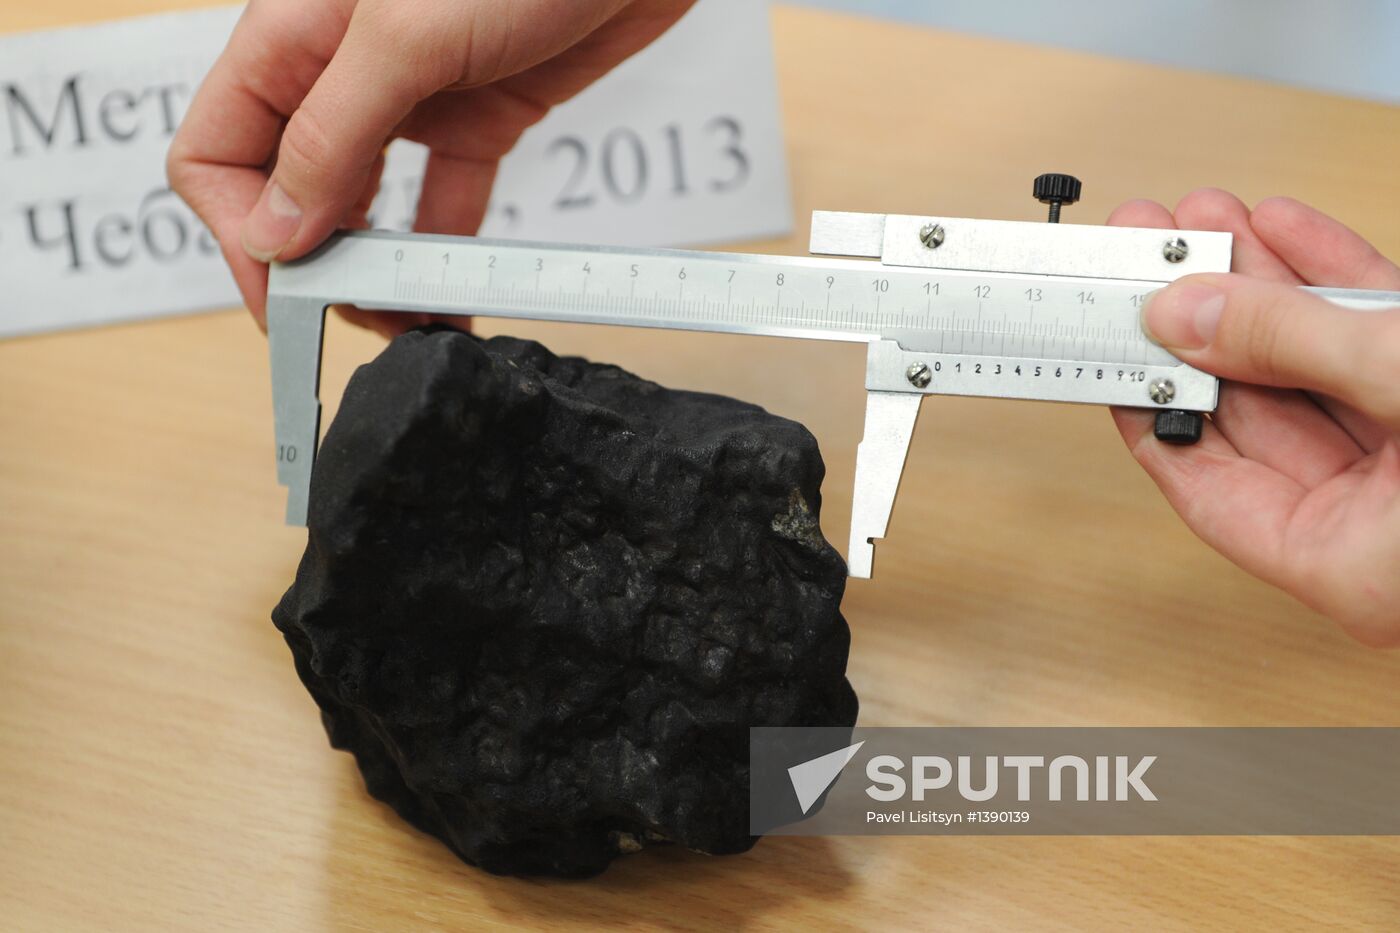 Scientists analyze structure of fallen meteorite